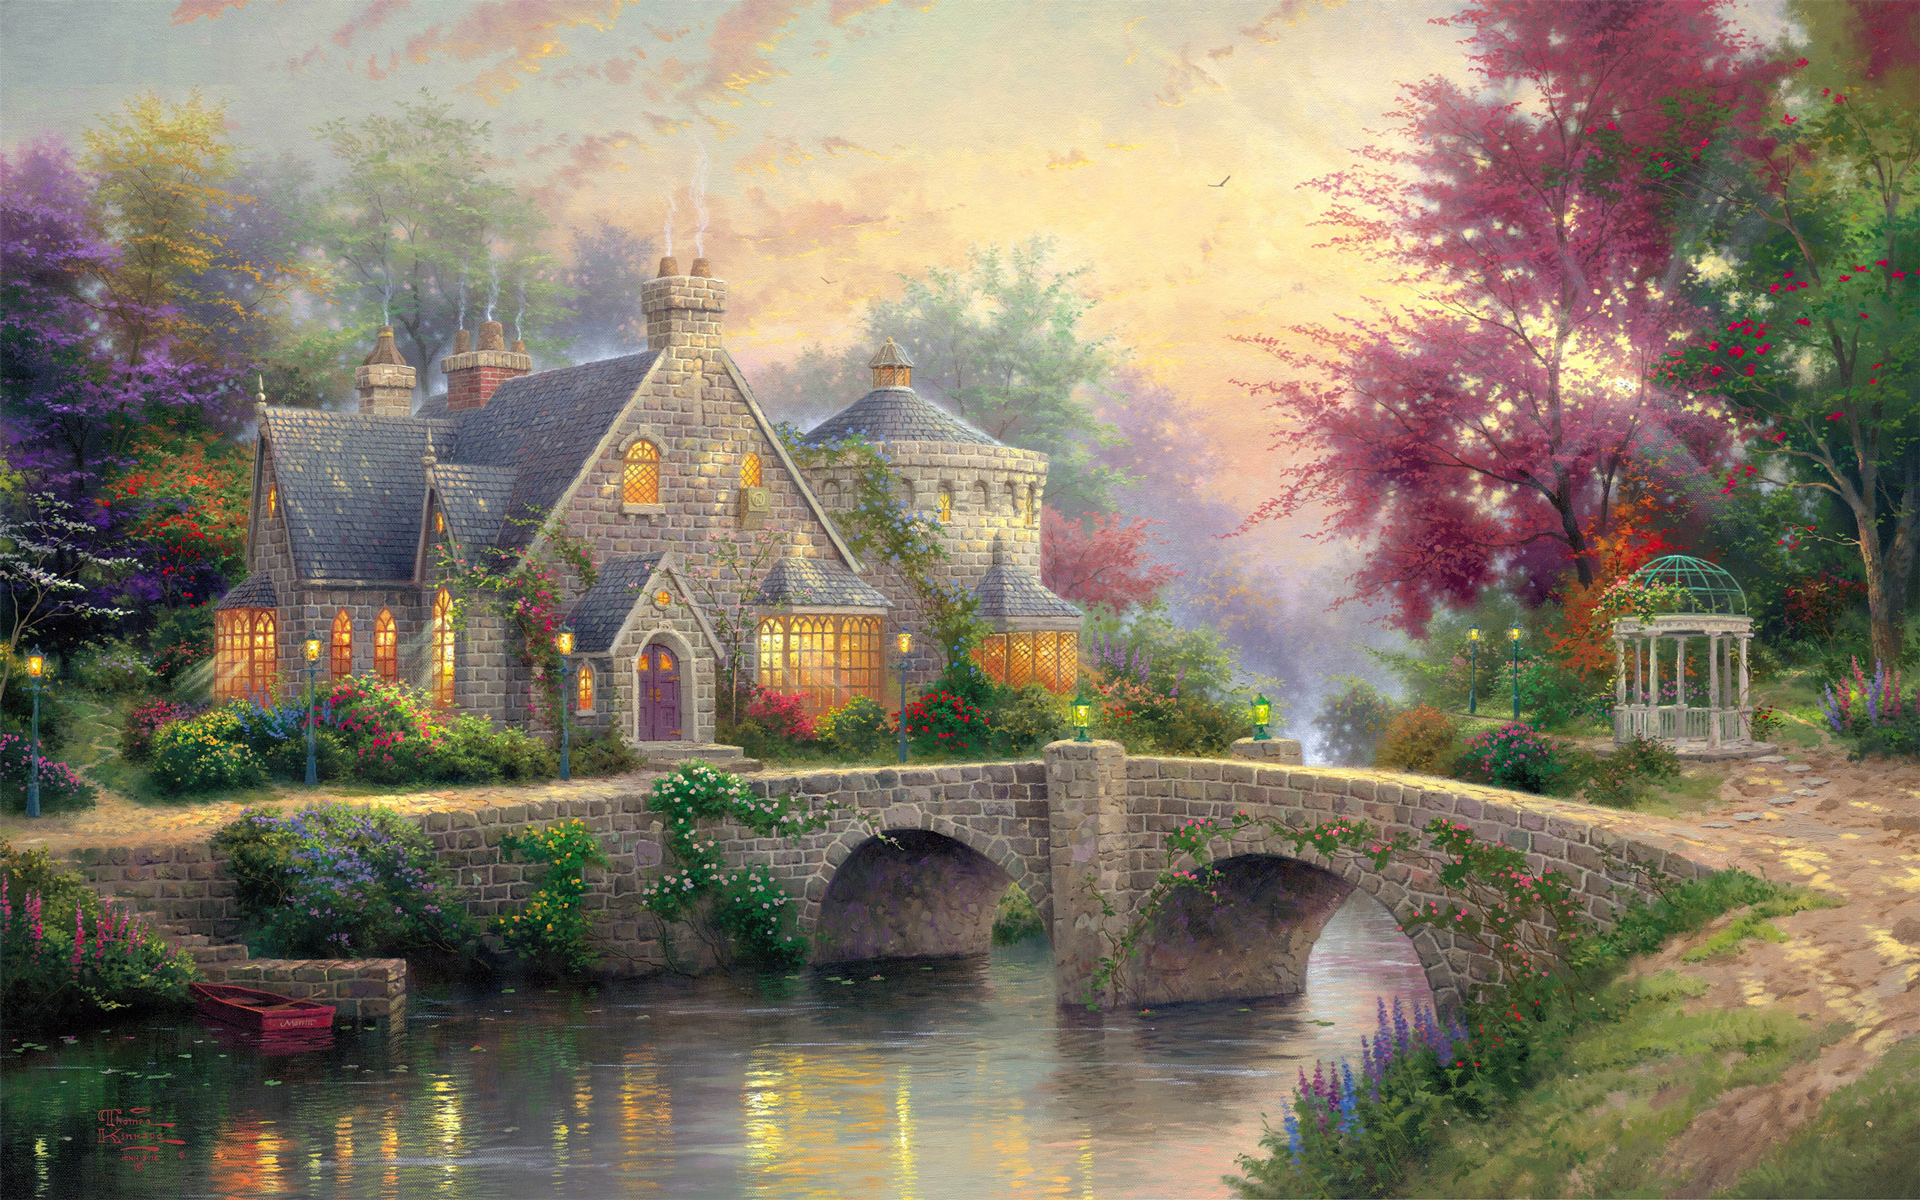 Beautiful Cottage Art Puter Desktop Wallpaper Pictures